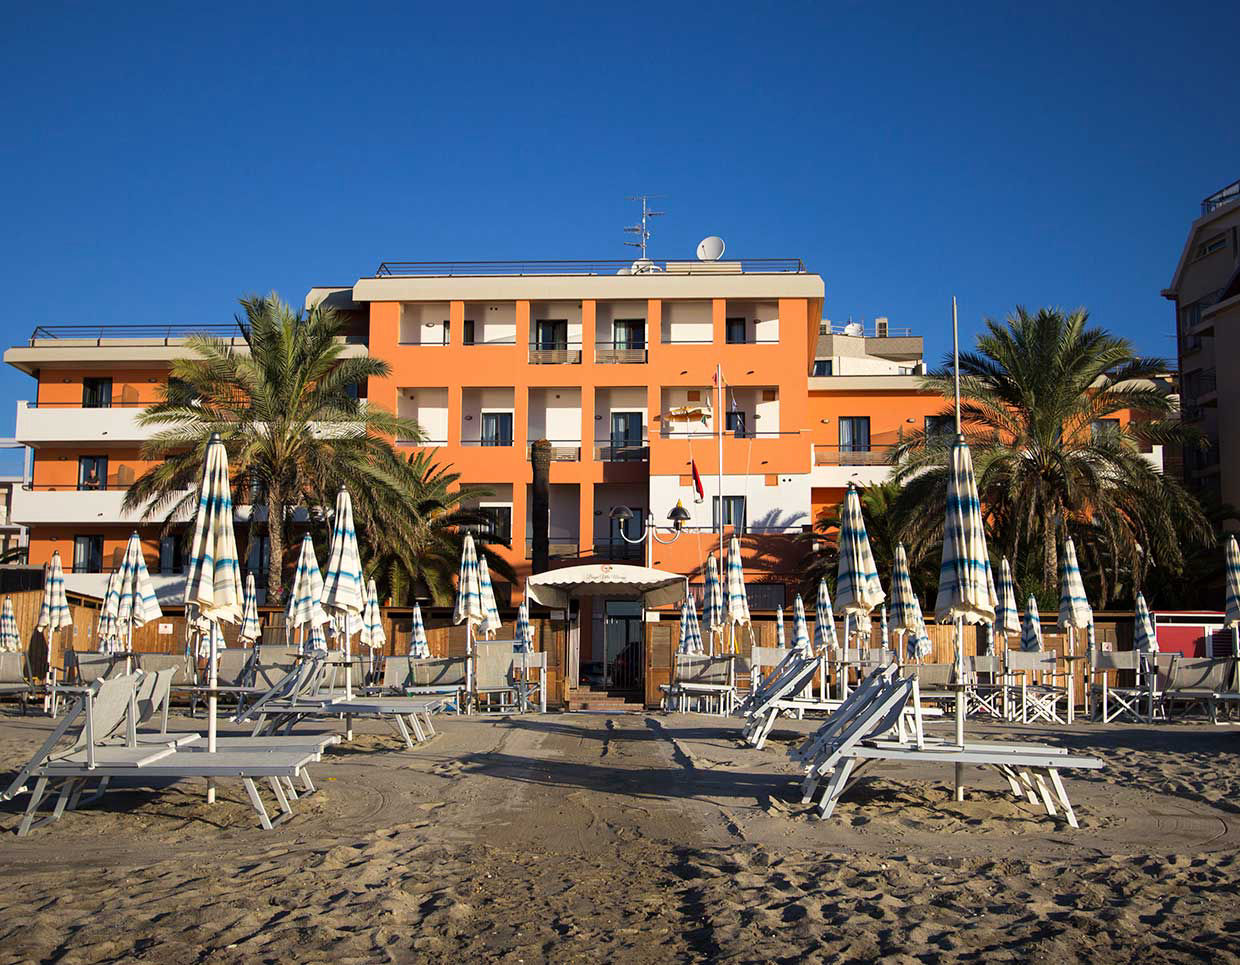 Albergo Villa Marina hotel sul mare in liguria a Pietra Ligure. Hotel per celiaci. Hotel per famiglie 